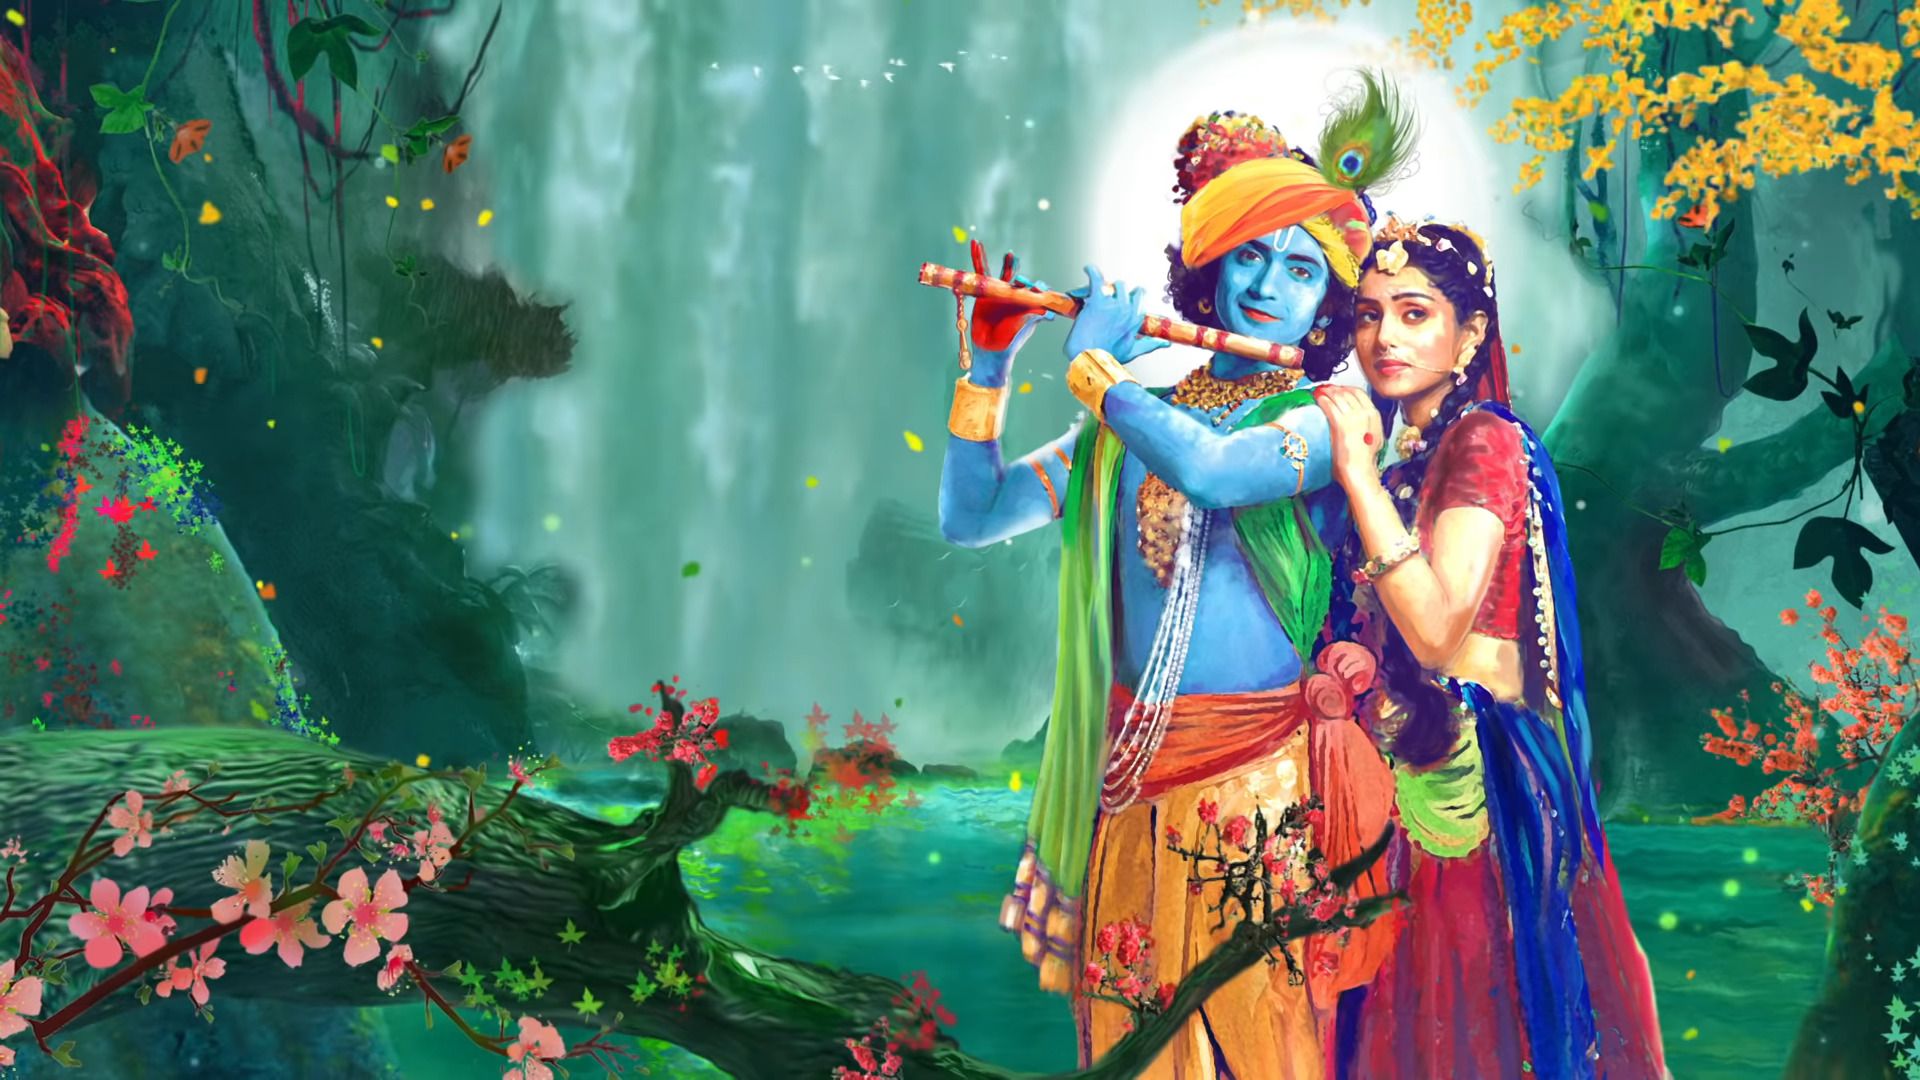 Radha Krishna Desktop HD Wallpapers - Wallpaper Cave